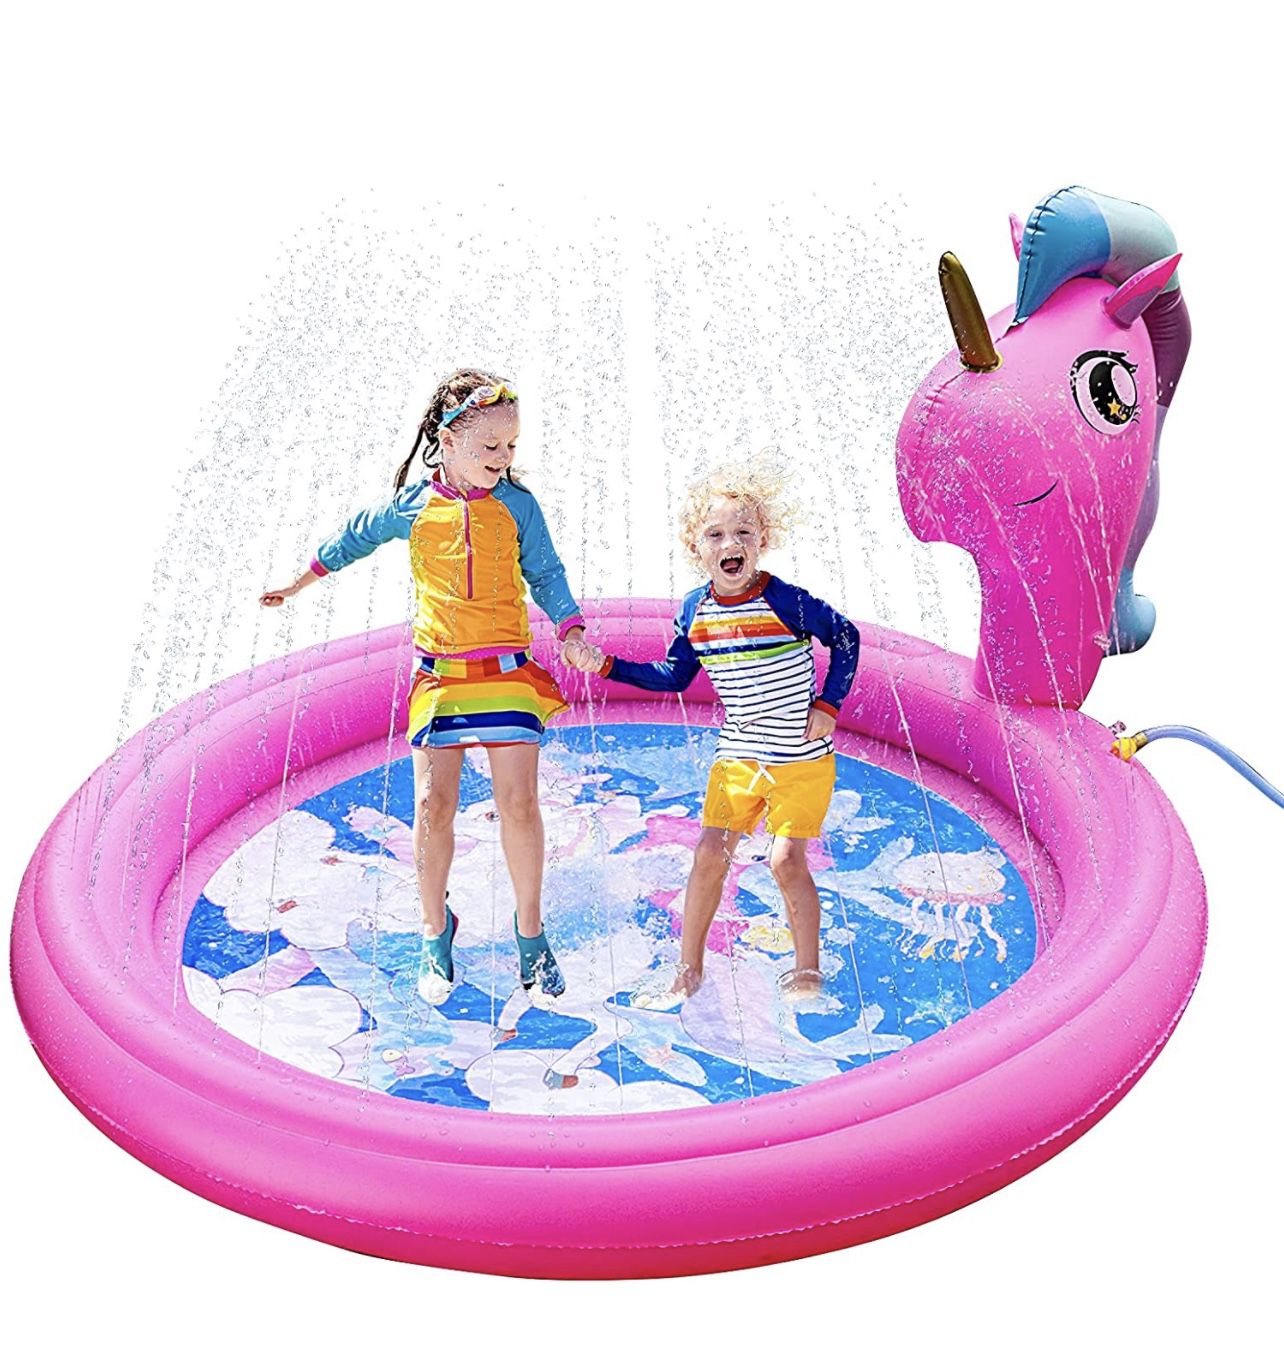 Unicorn Splash Pads Sprinkler for Kids Toddler, Large Size 71" Outdoor Inflatable Wading Pool